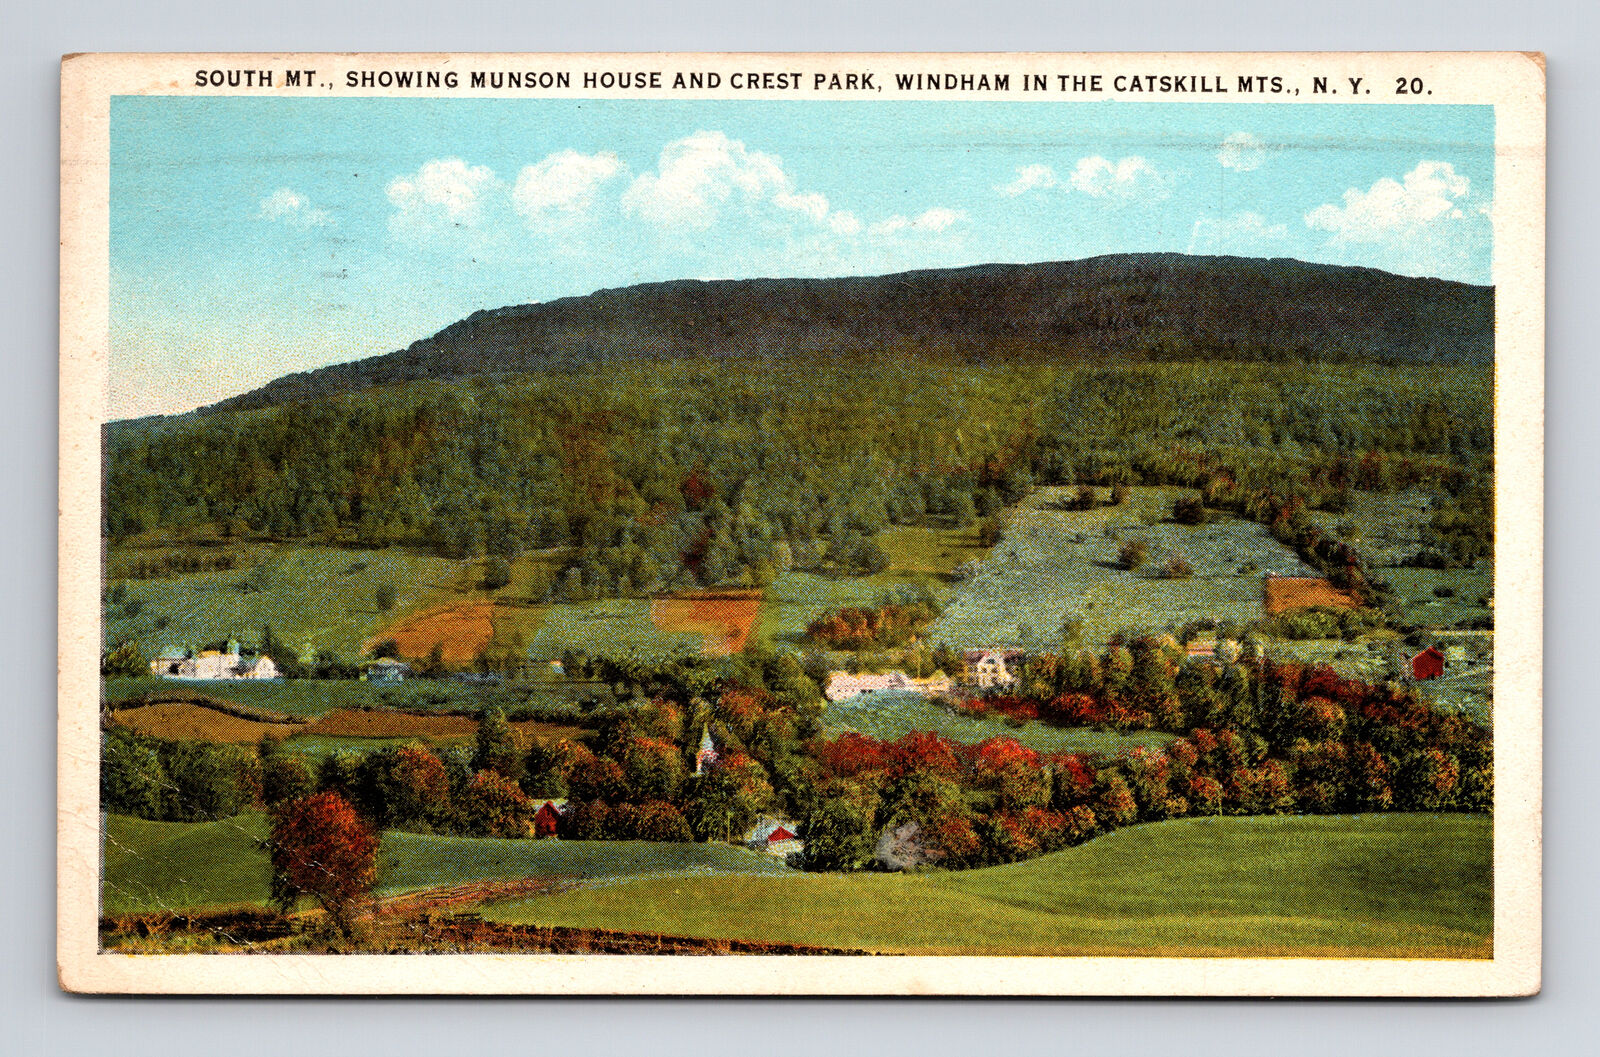 c1927 Postcard Windham NY South Mtn Munson House Crest Park Windham Catskill